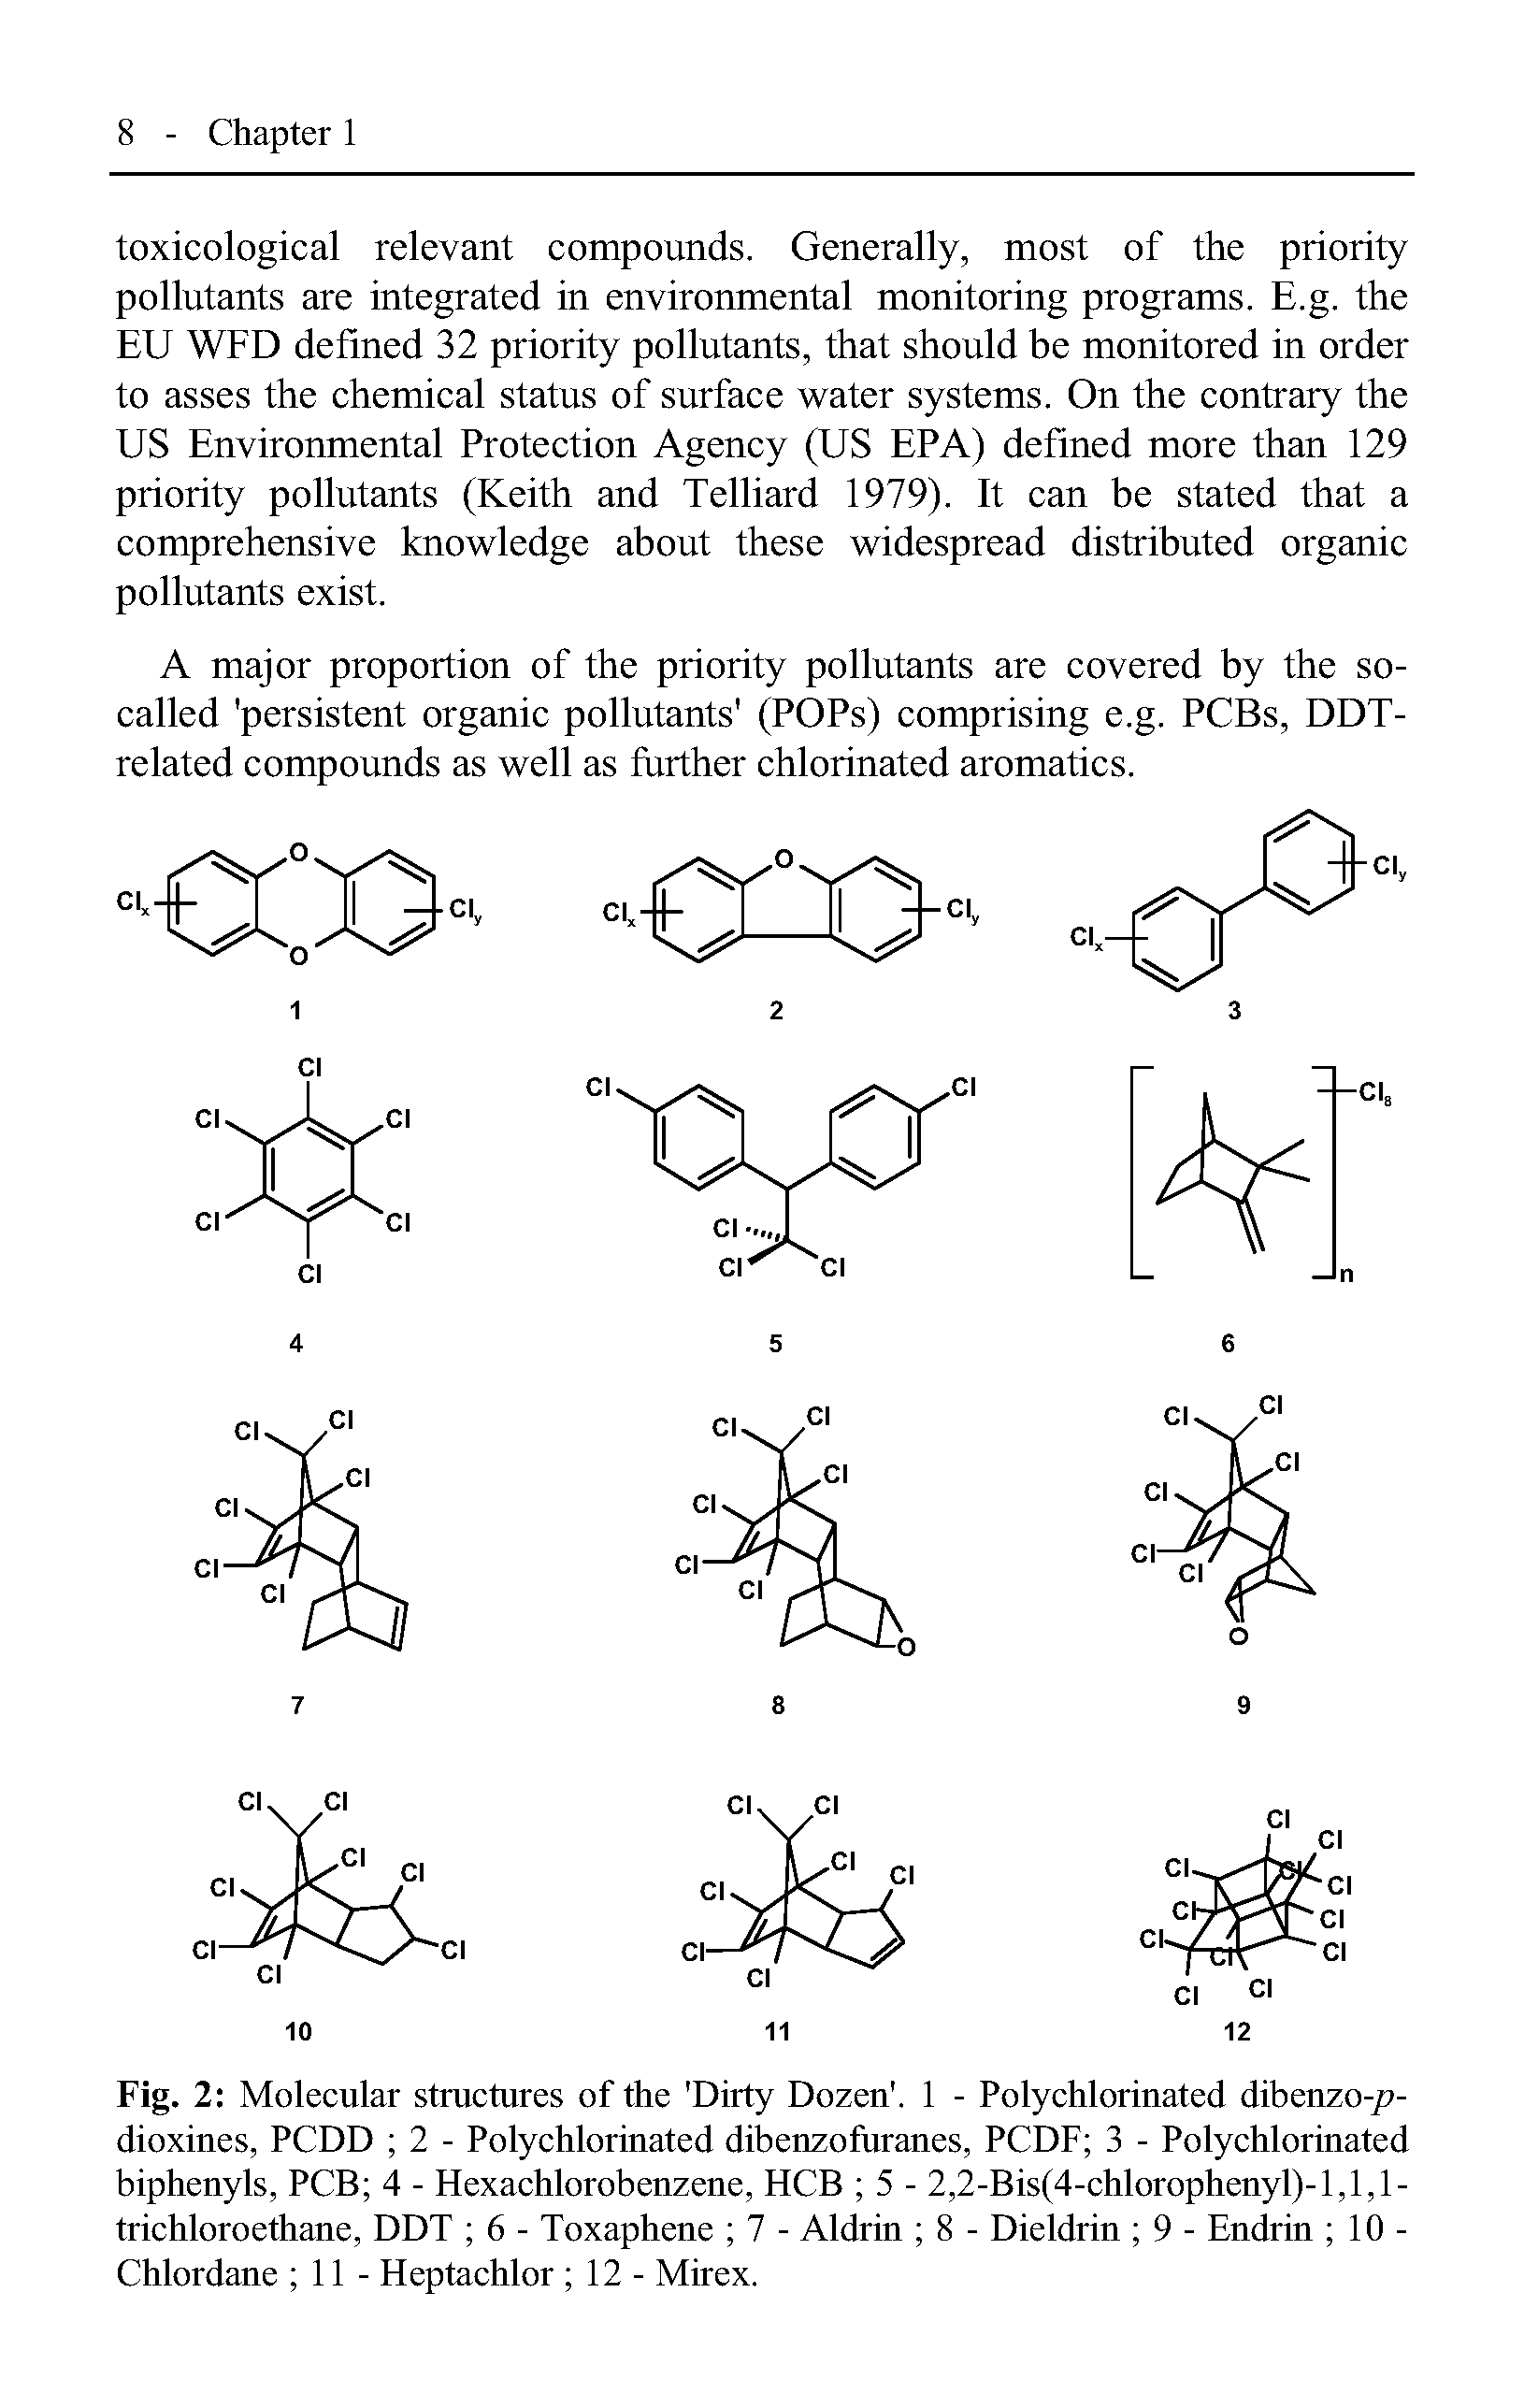 Fig. 2 Molecular structures of the Dirty Dozen. 1 - Polychlorinated dibenzo-p-dioxines, PCDD 2 - Polychlorinated dibenzofuranes, PCDF 3 - Polychlorinated biphenyls, PCB 4 - Hexachlorobenzene, HCB 5 - 2,2-Bis(4-chlorophenyl)-l,l,l-trichloroethane, DDT 6 - Toxaphene 7 - Aldrin 8 - Dieldrin 9 - Endrin 10 -Chlordane 11 - Heptachlor 12 - Mirex.